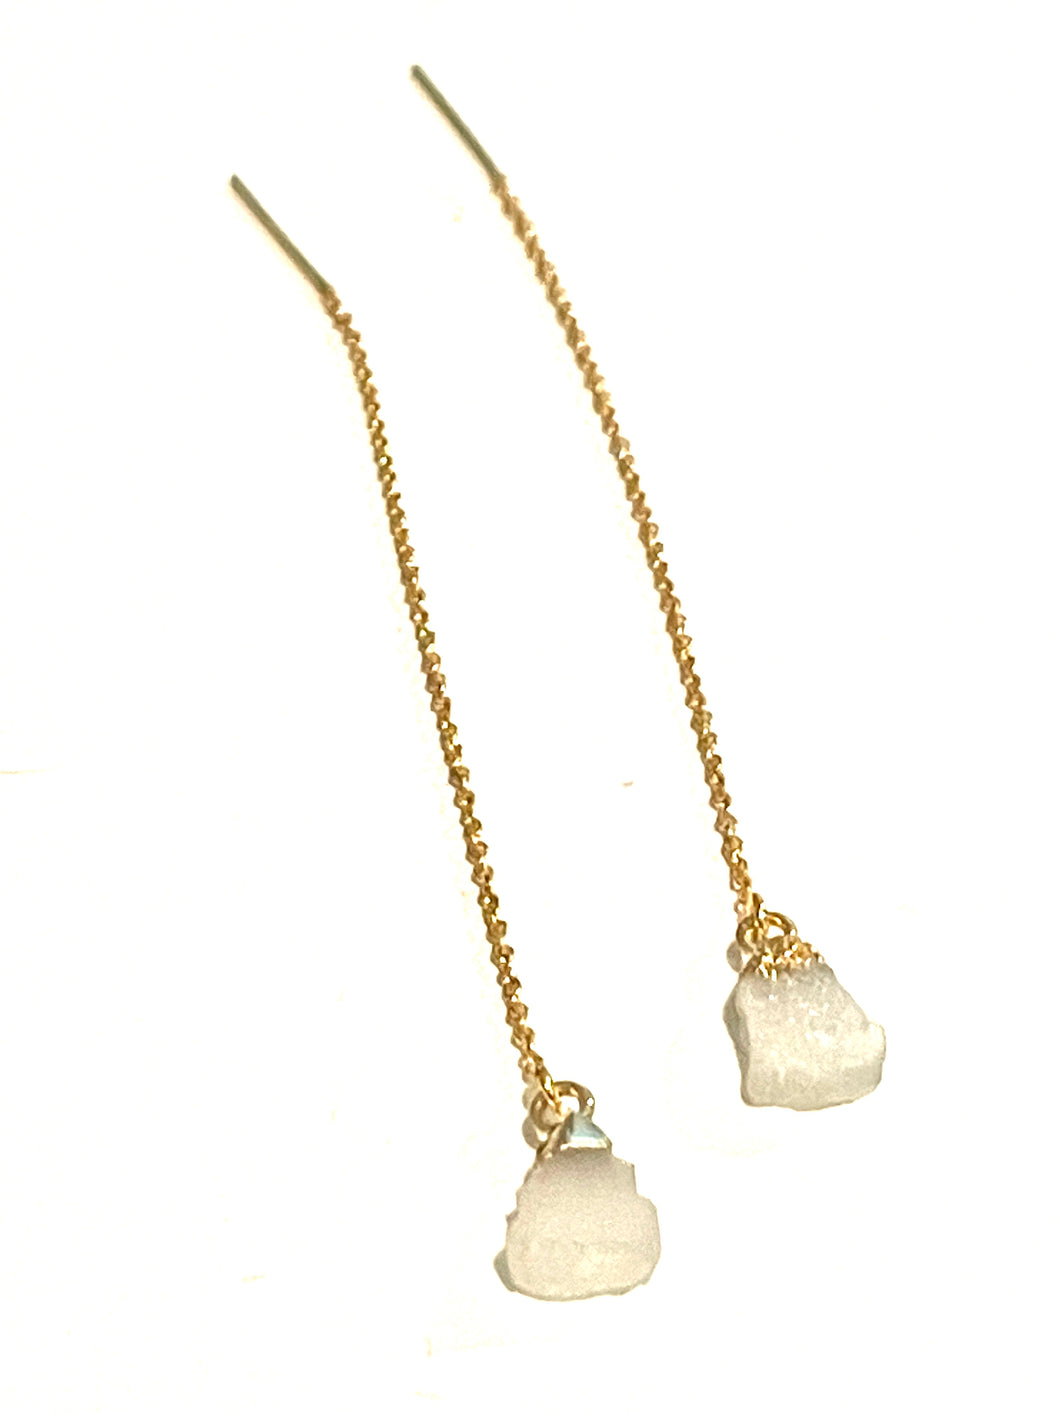 Earrings | Gold Quartz Druzy Threaders